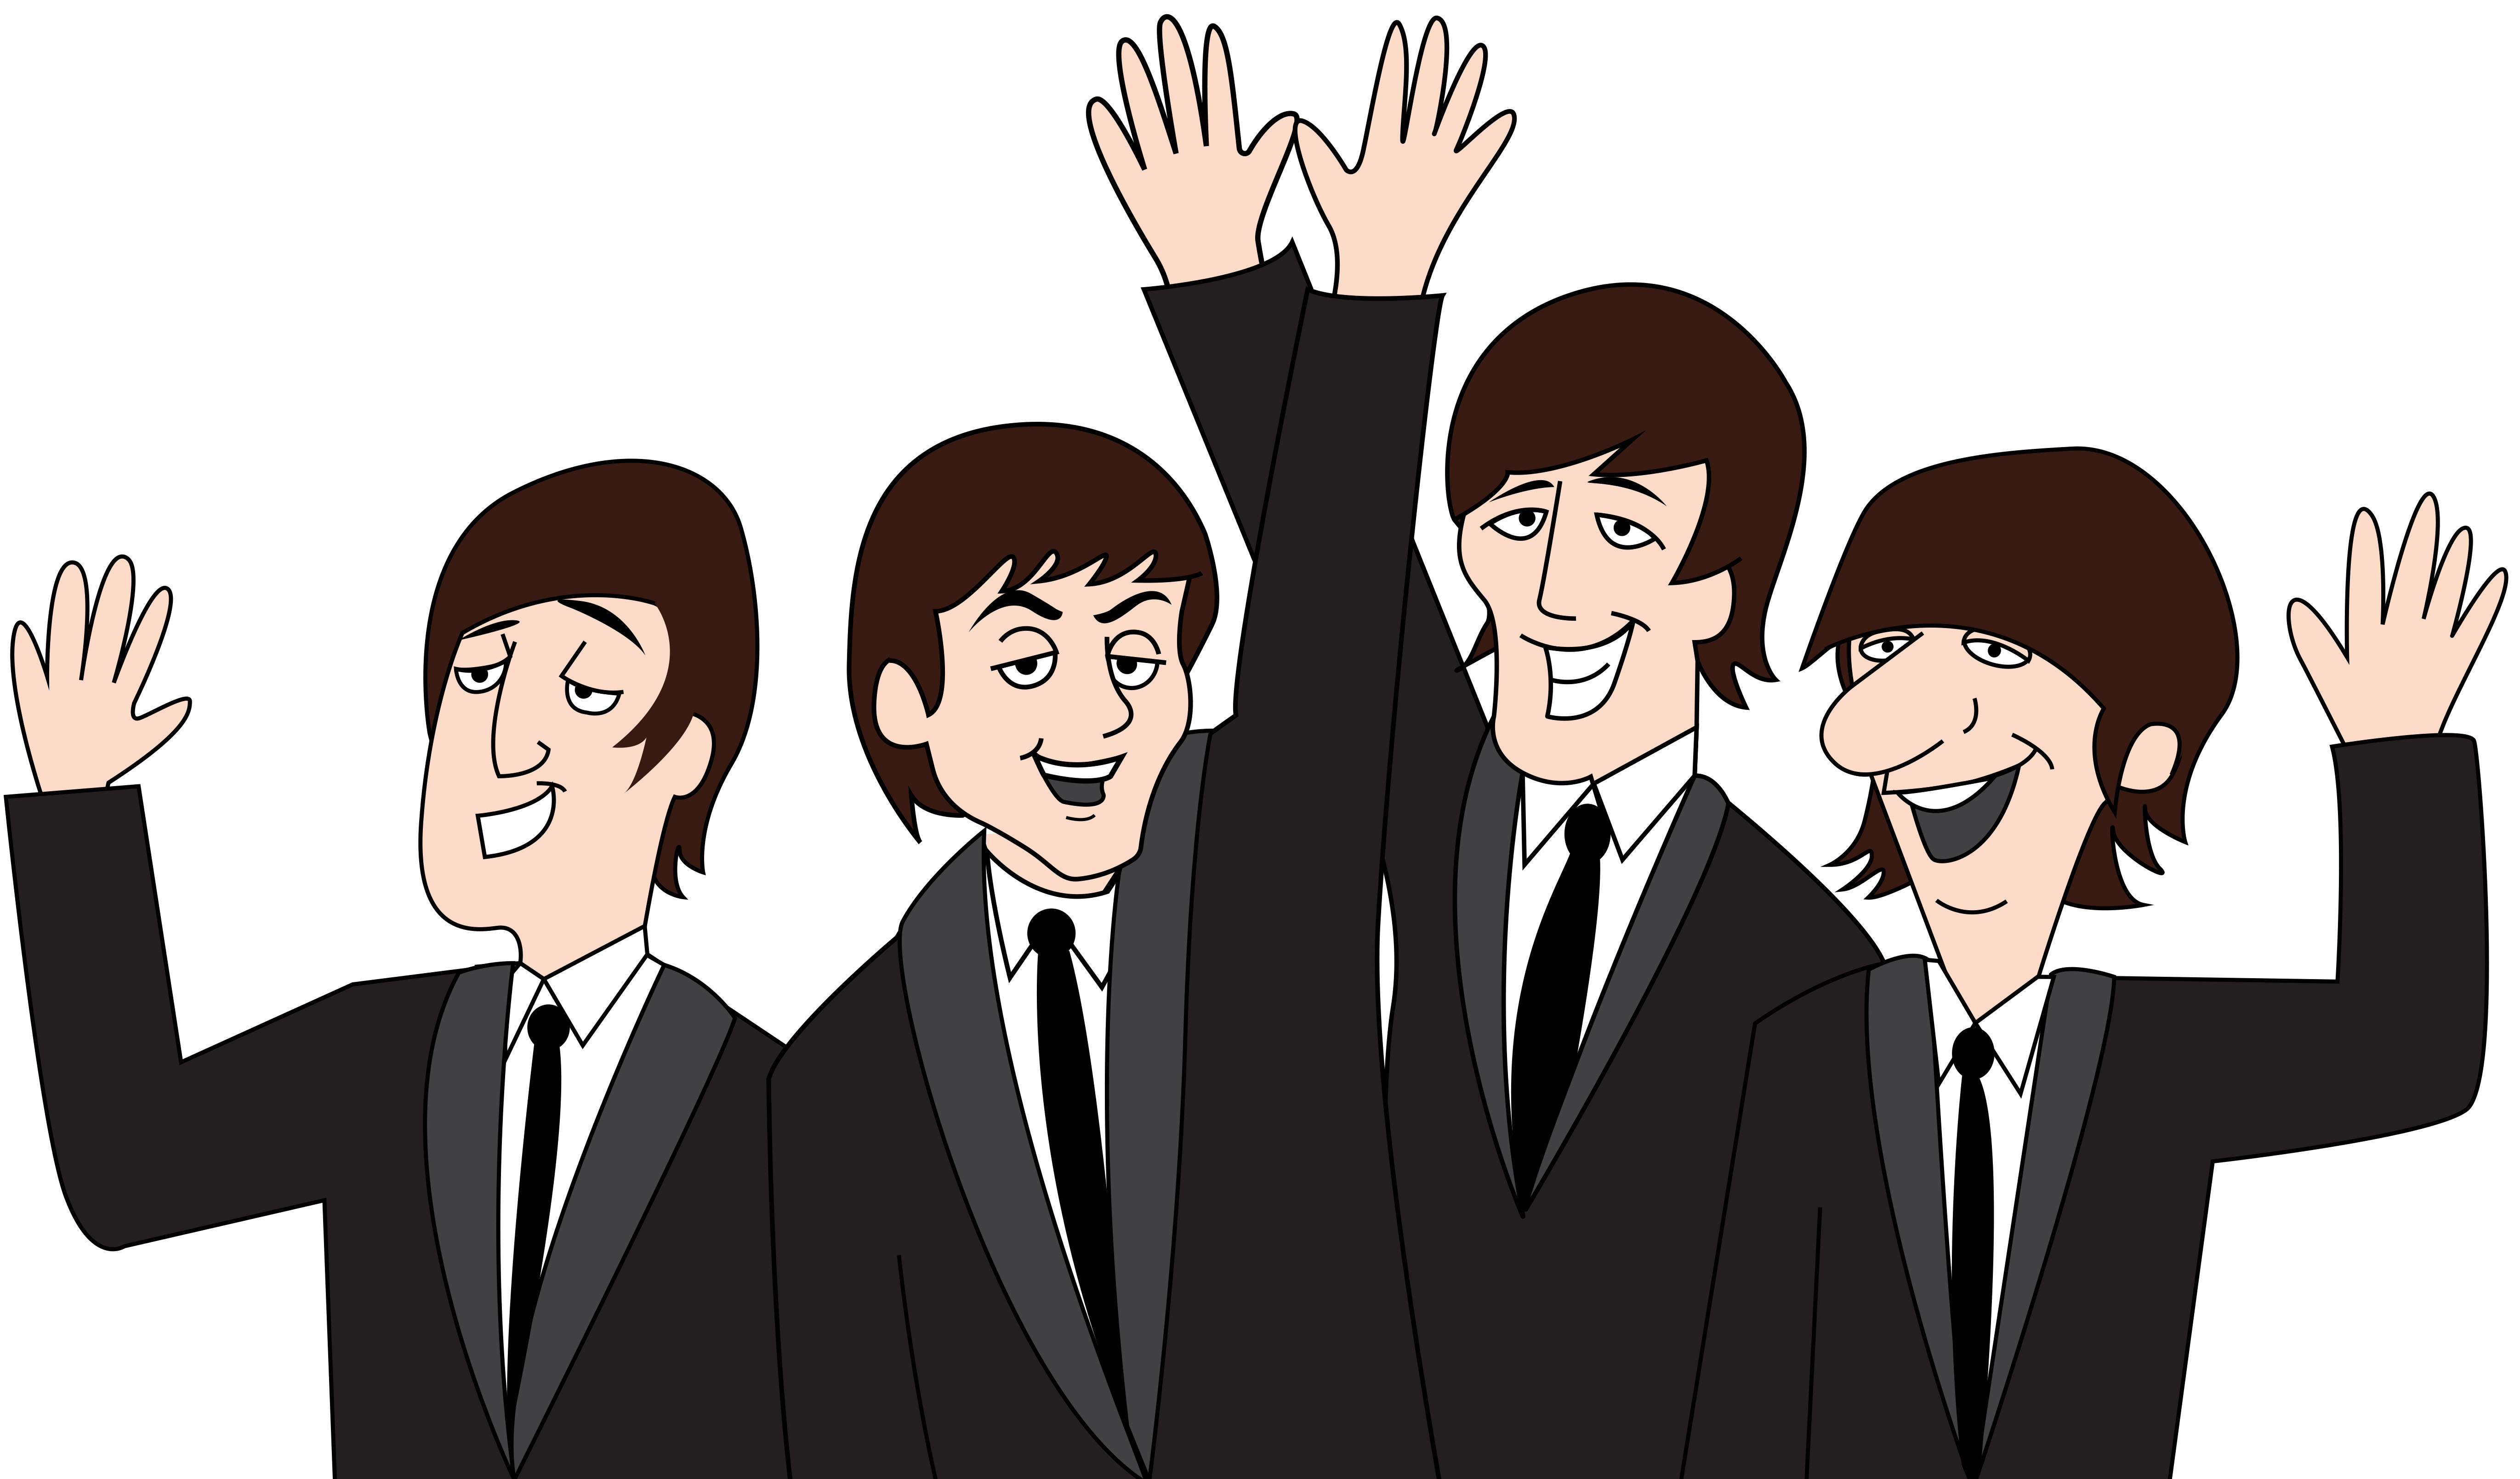 Beatleswocolorbkgd.jpg